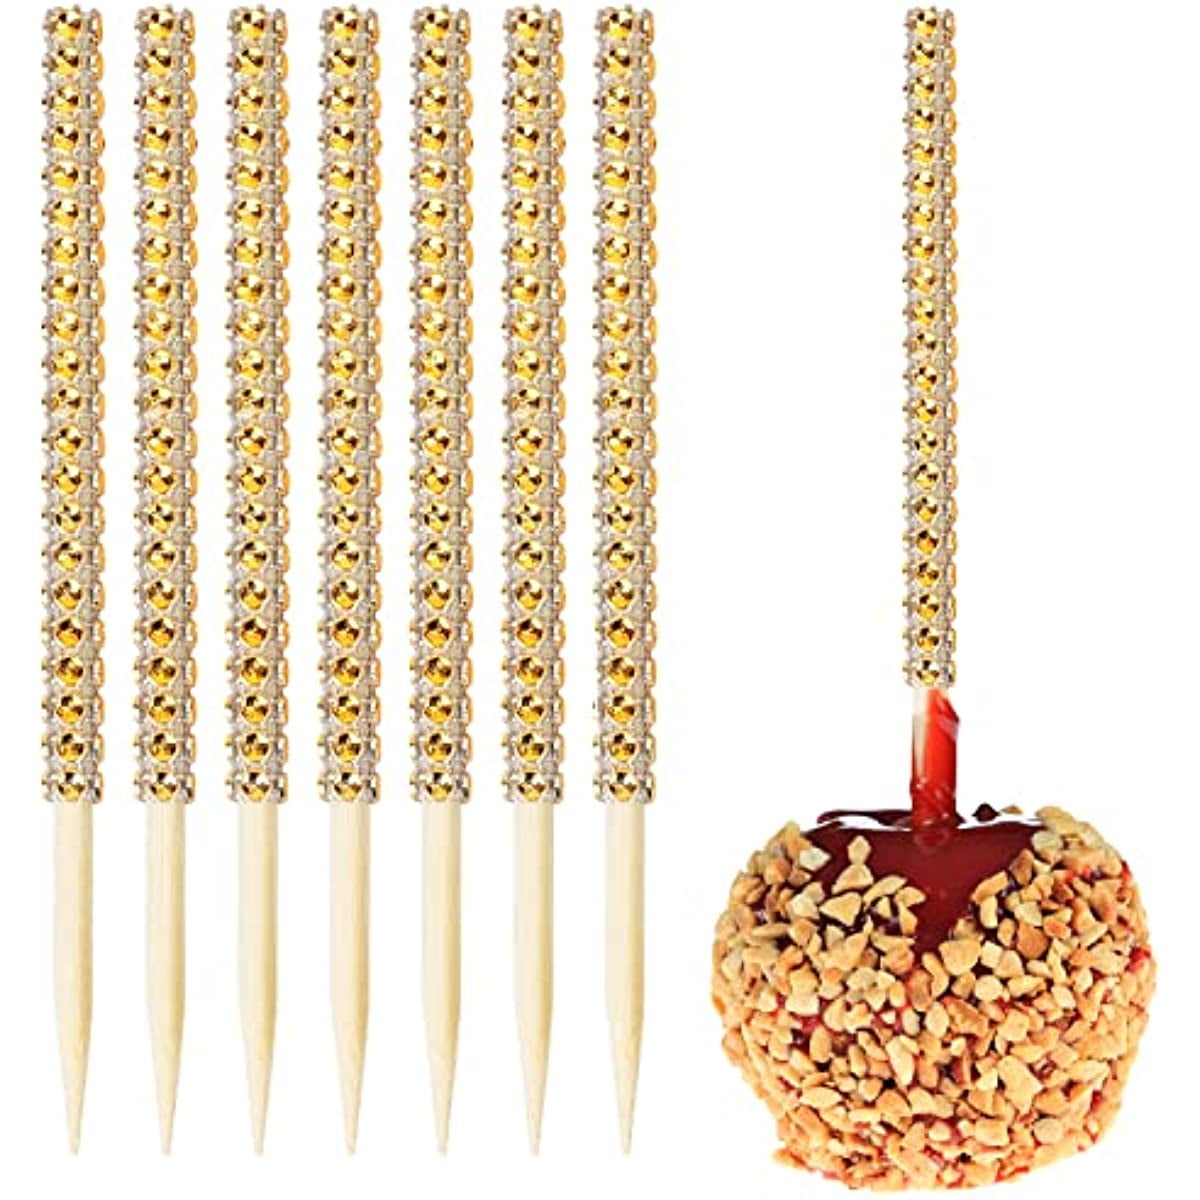 10pcs Jeweled Candy Apple Sticks, Silver Bling Rhinestone Caramel